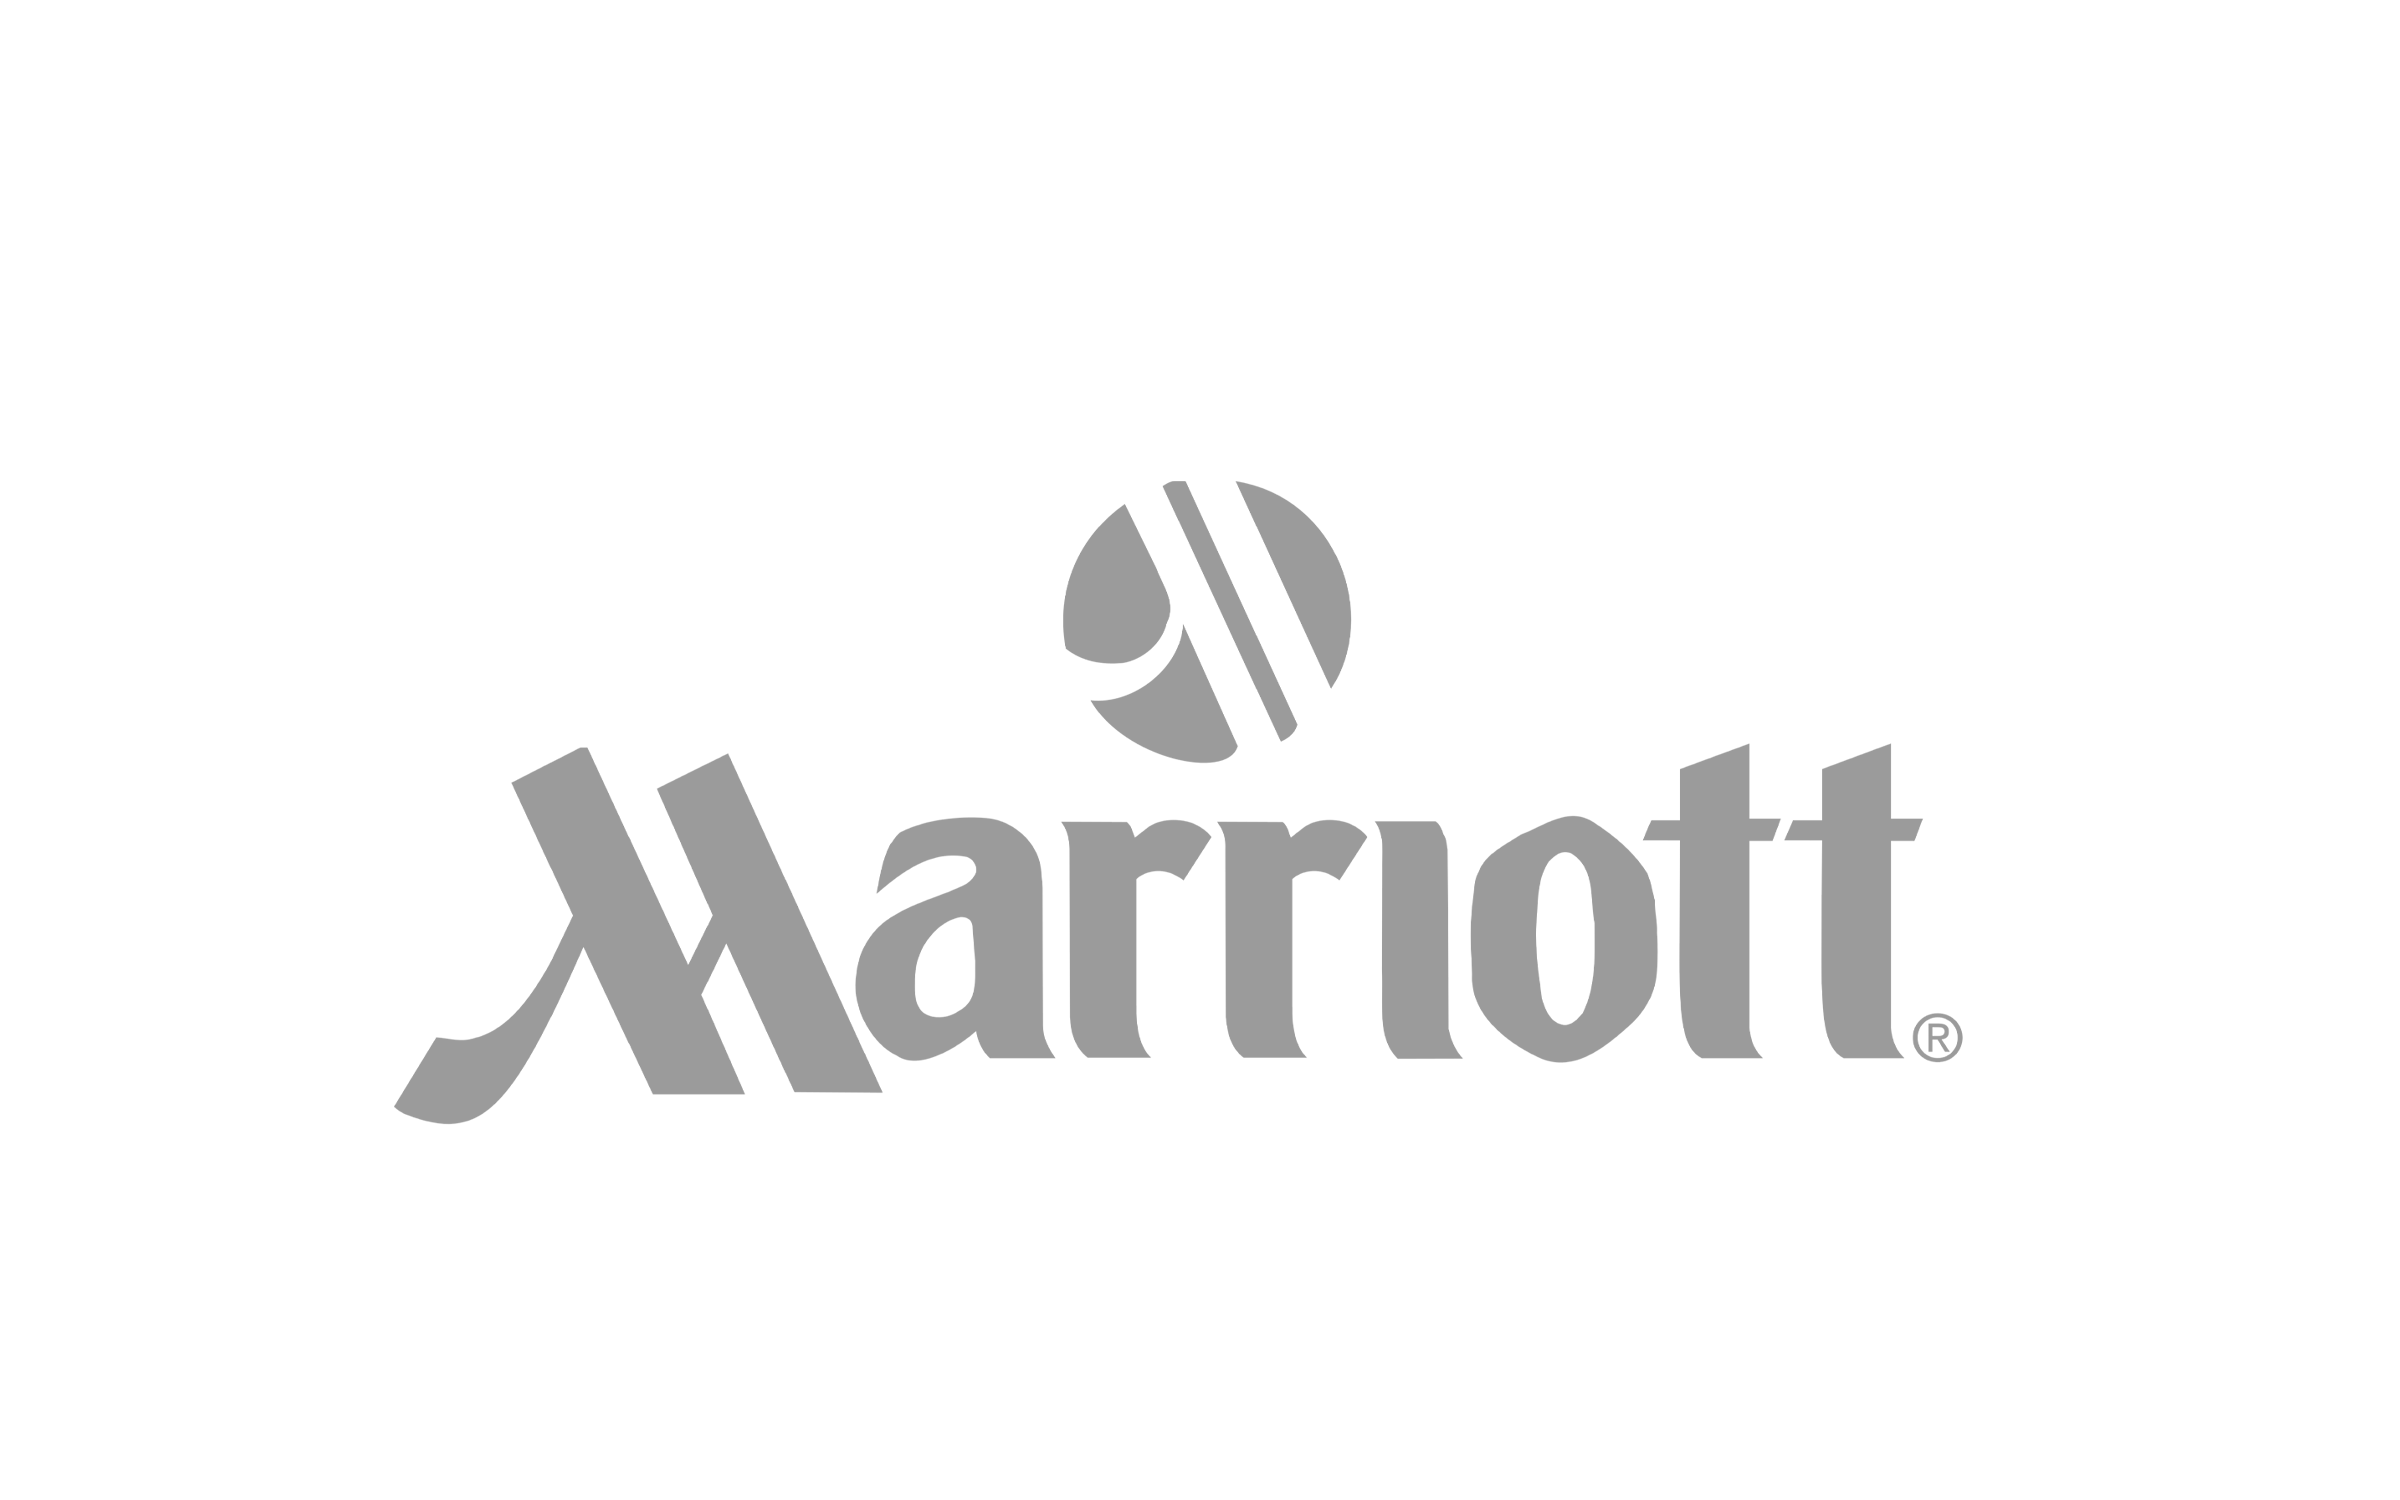 marriot.png